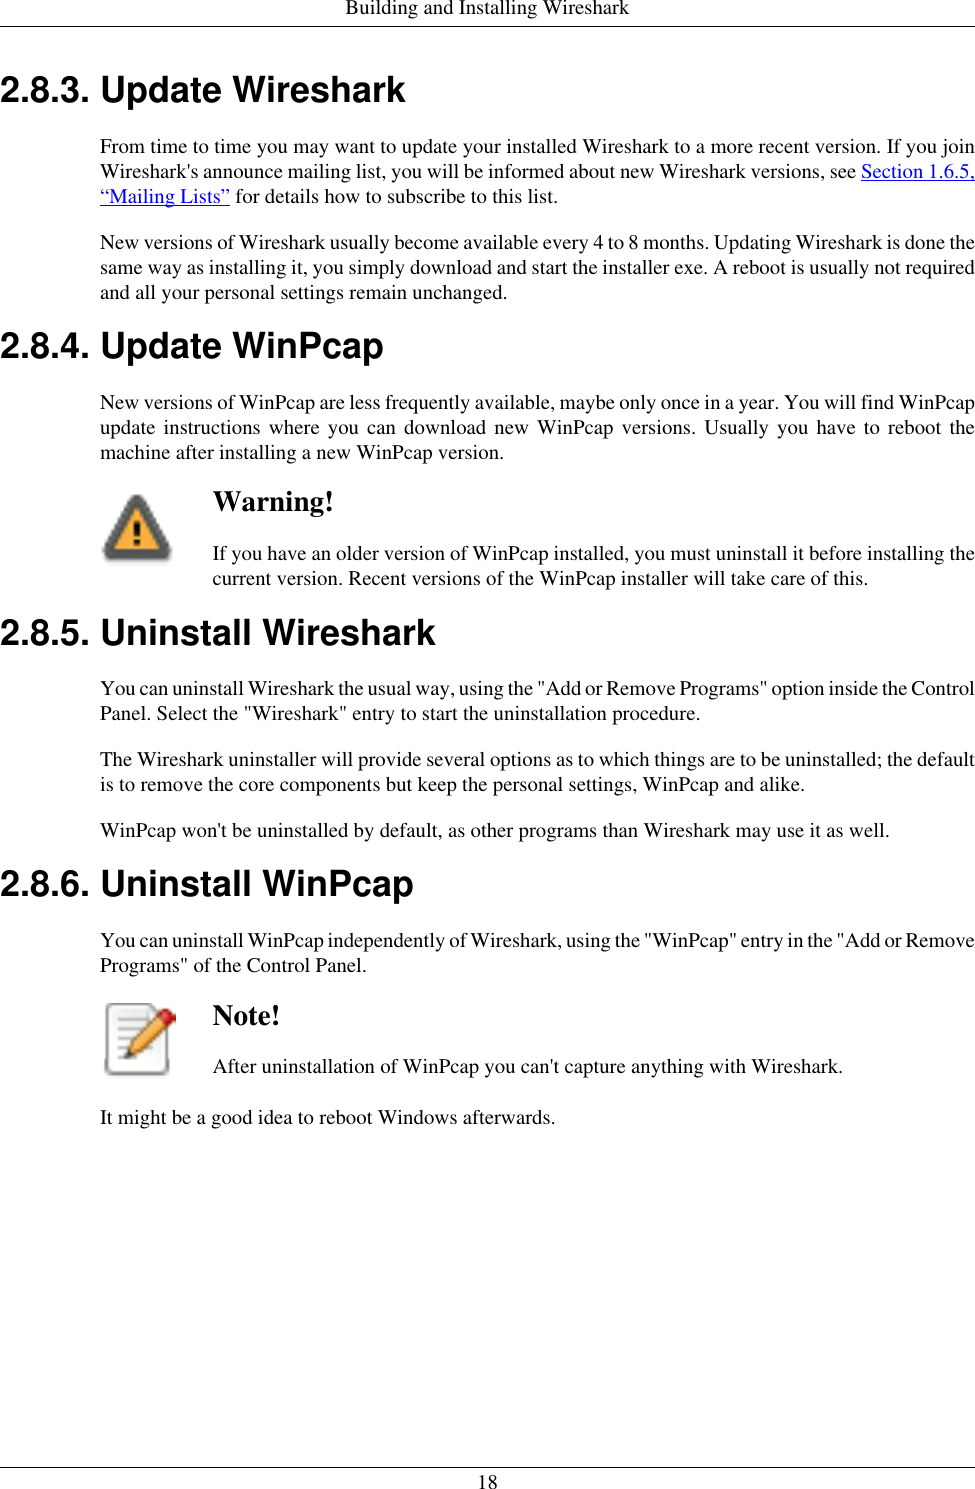 download winpcap for windows 10 64 bit